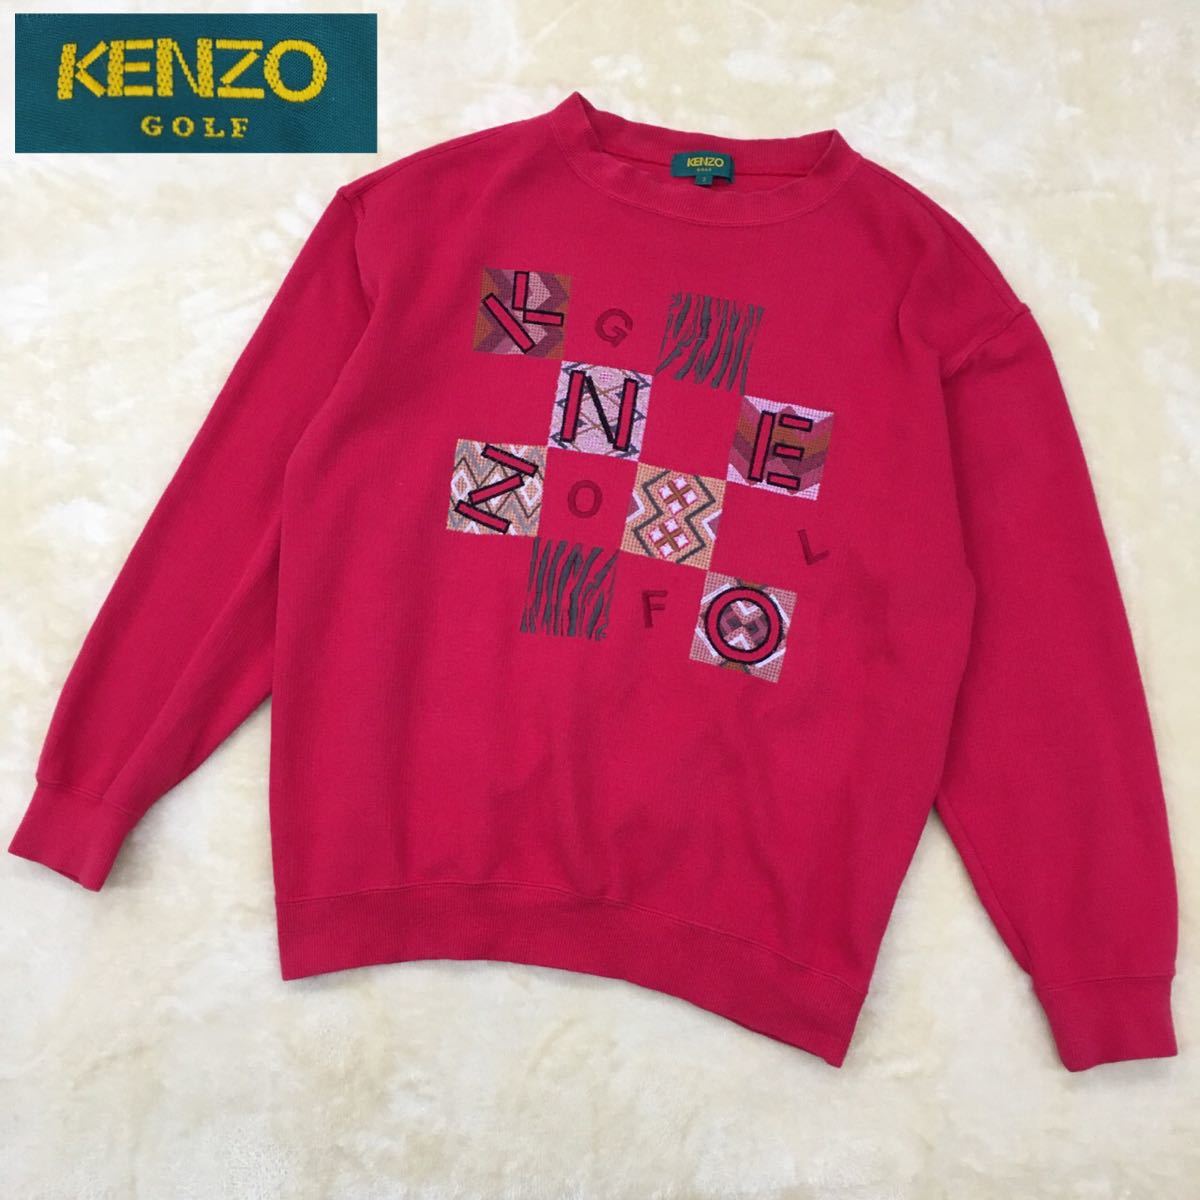 KENZO GOLF ケンゾー ゴルフウェア スポーツ スウェット デザイントレーナー プルオーバー 丸首 長袖 刺繍ロゴ メンズ3 小杉産業 日本製